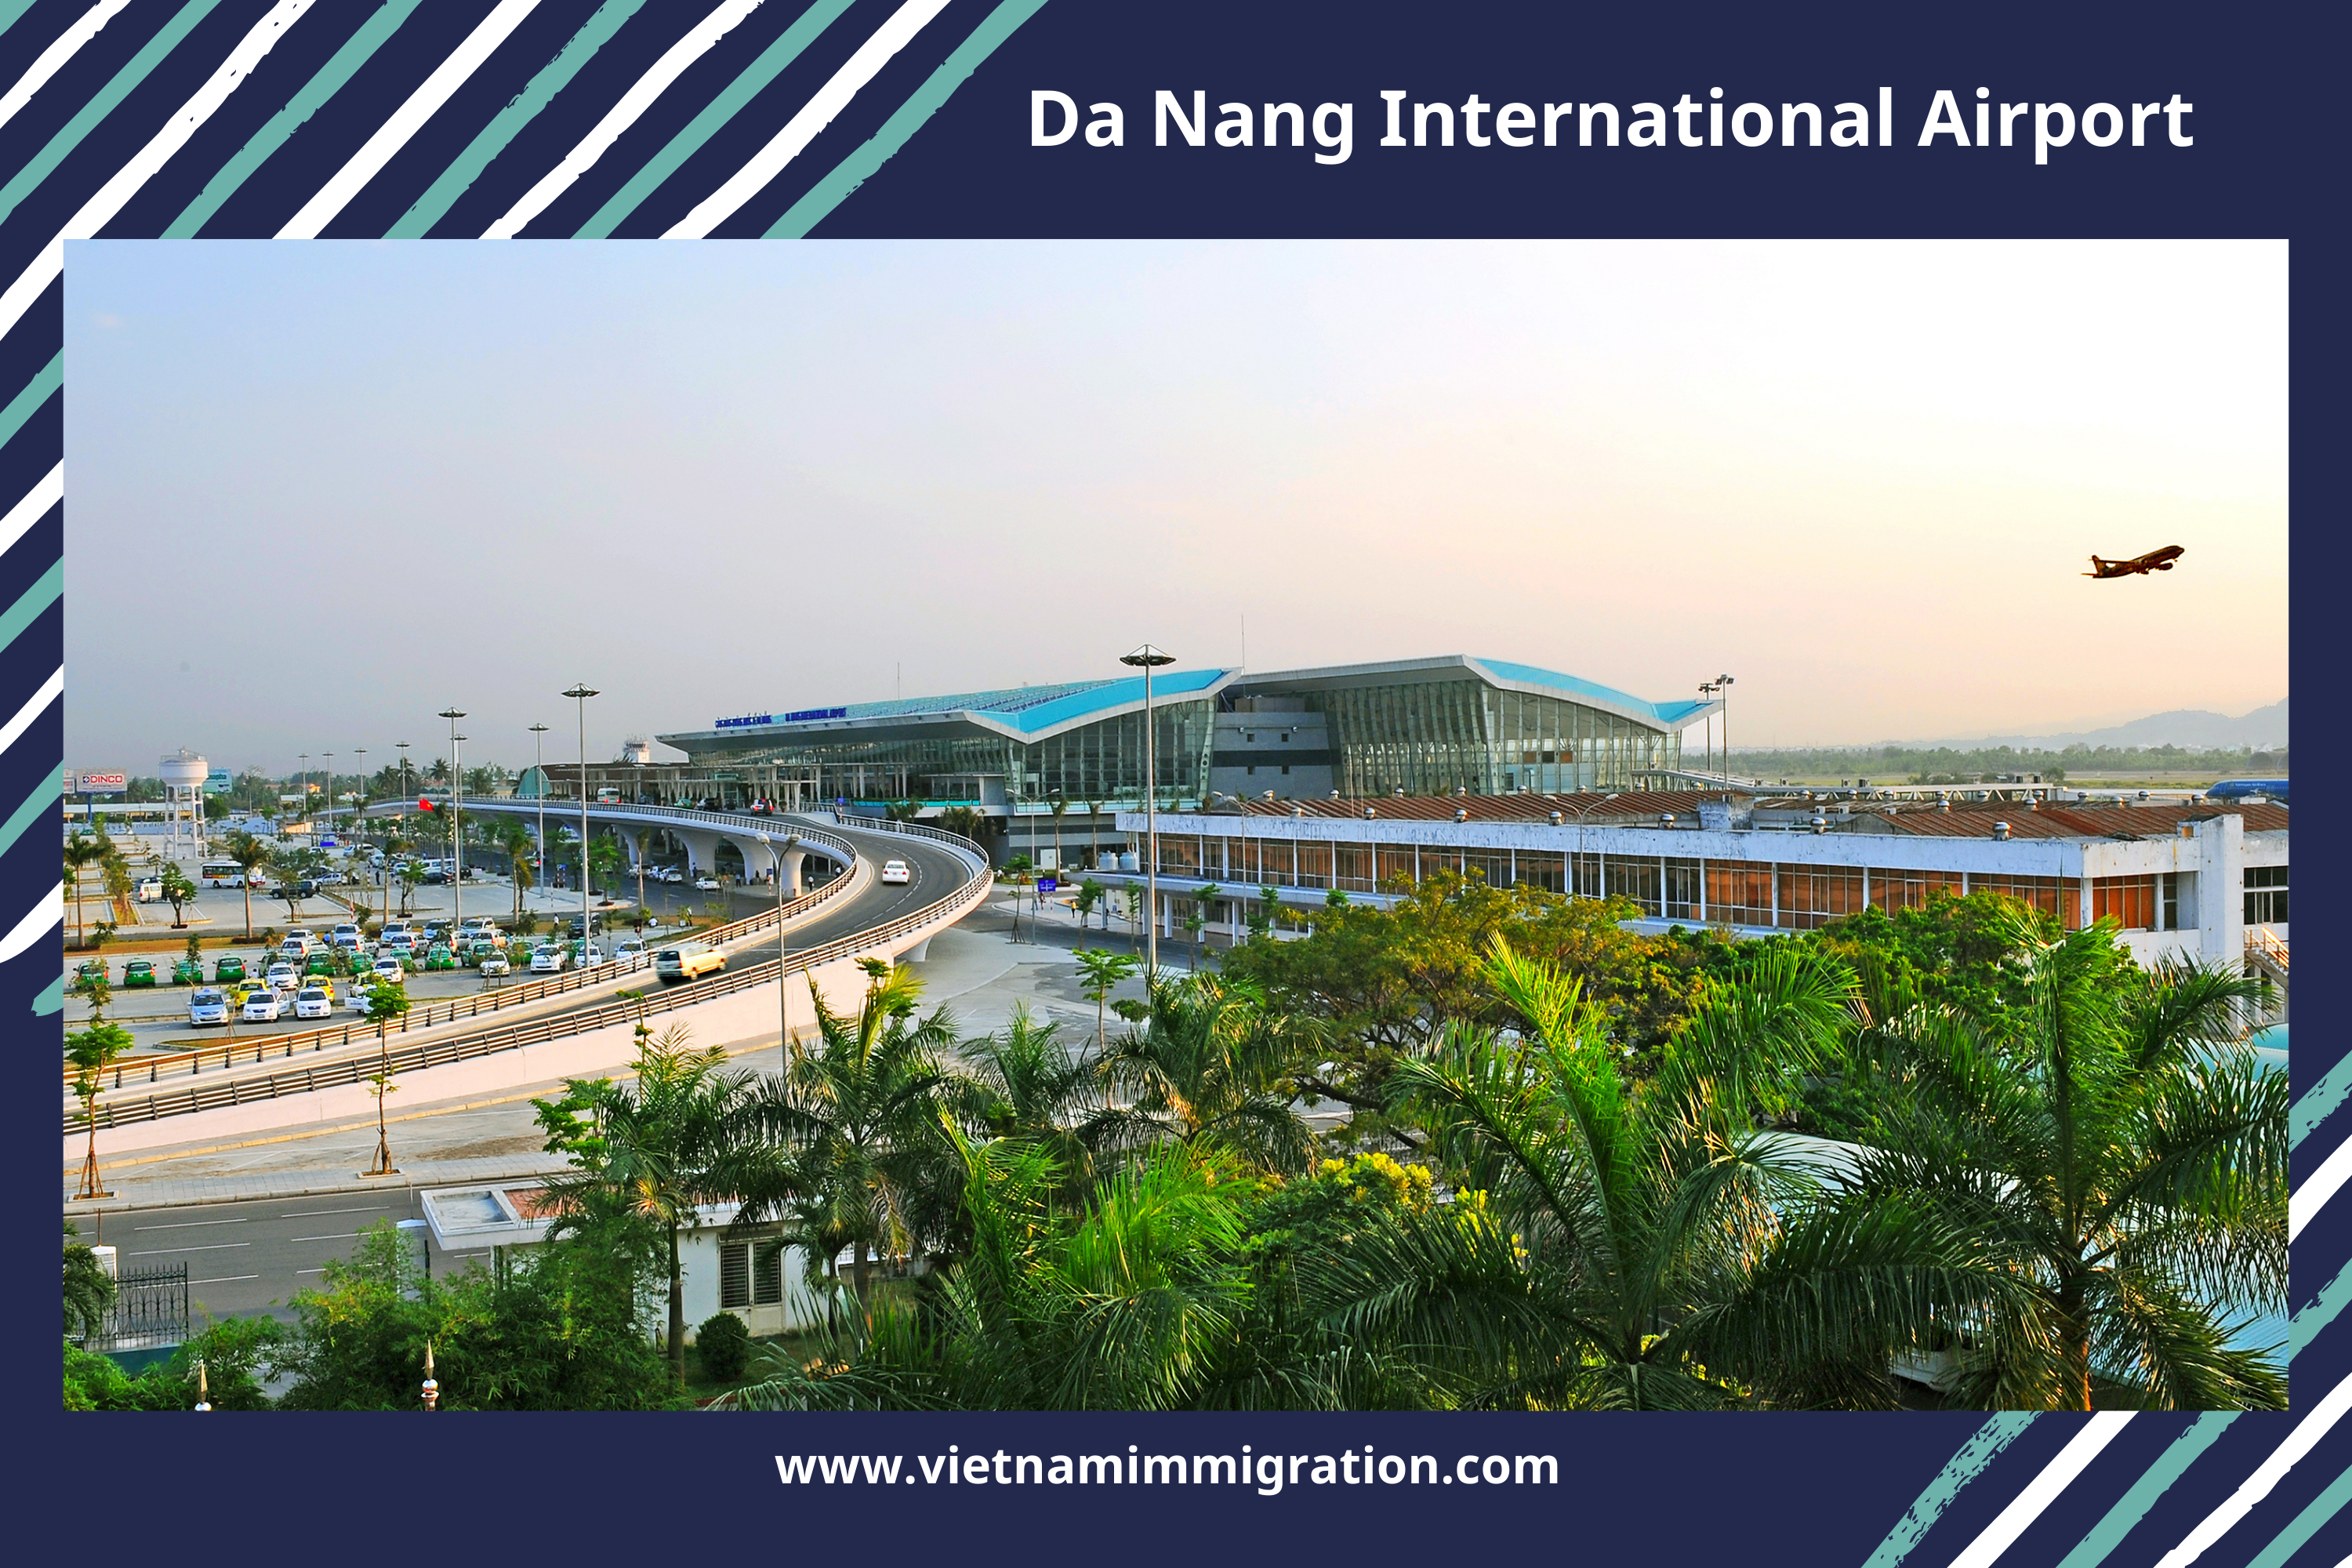 Vietnam E-visa for flying to Da Nang Airport in 2024 – How to Apply for Vietnam E-visa to Enter Da Nang Airport